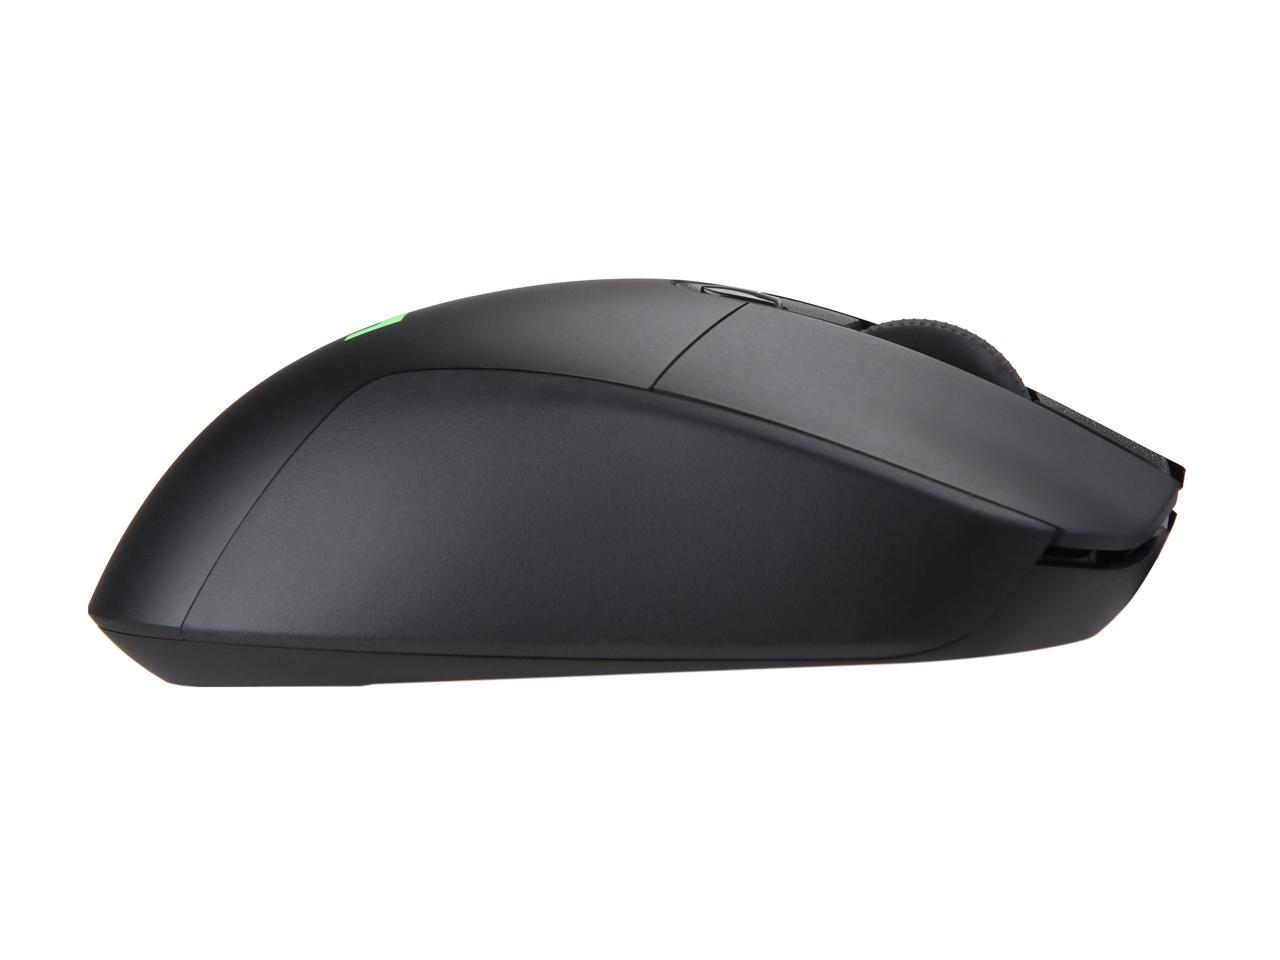 Logitech G703 LIGHTSPEED Wireless Gaming Mouse with HERO 16K Sensor, LIGHTSYNC RGB, POWERPLAY Compatible